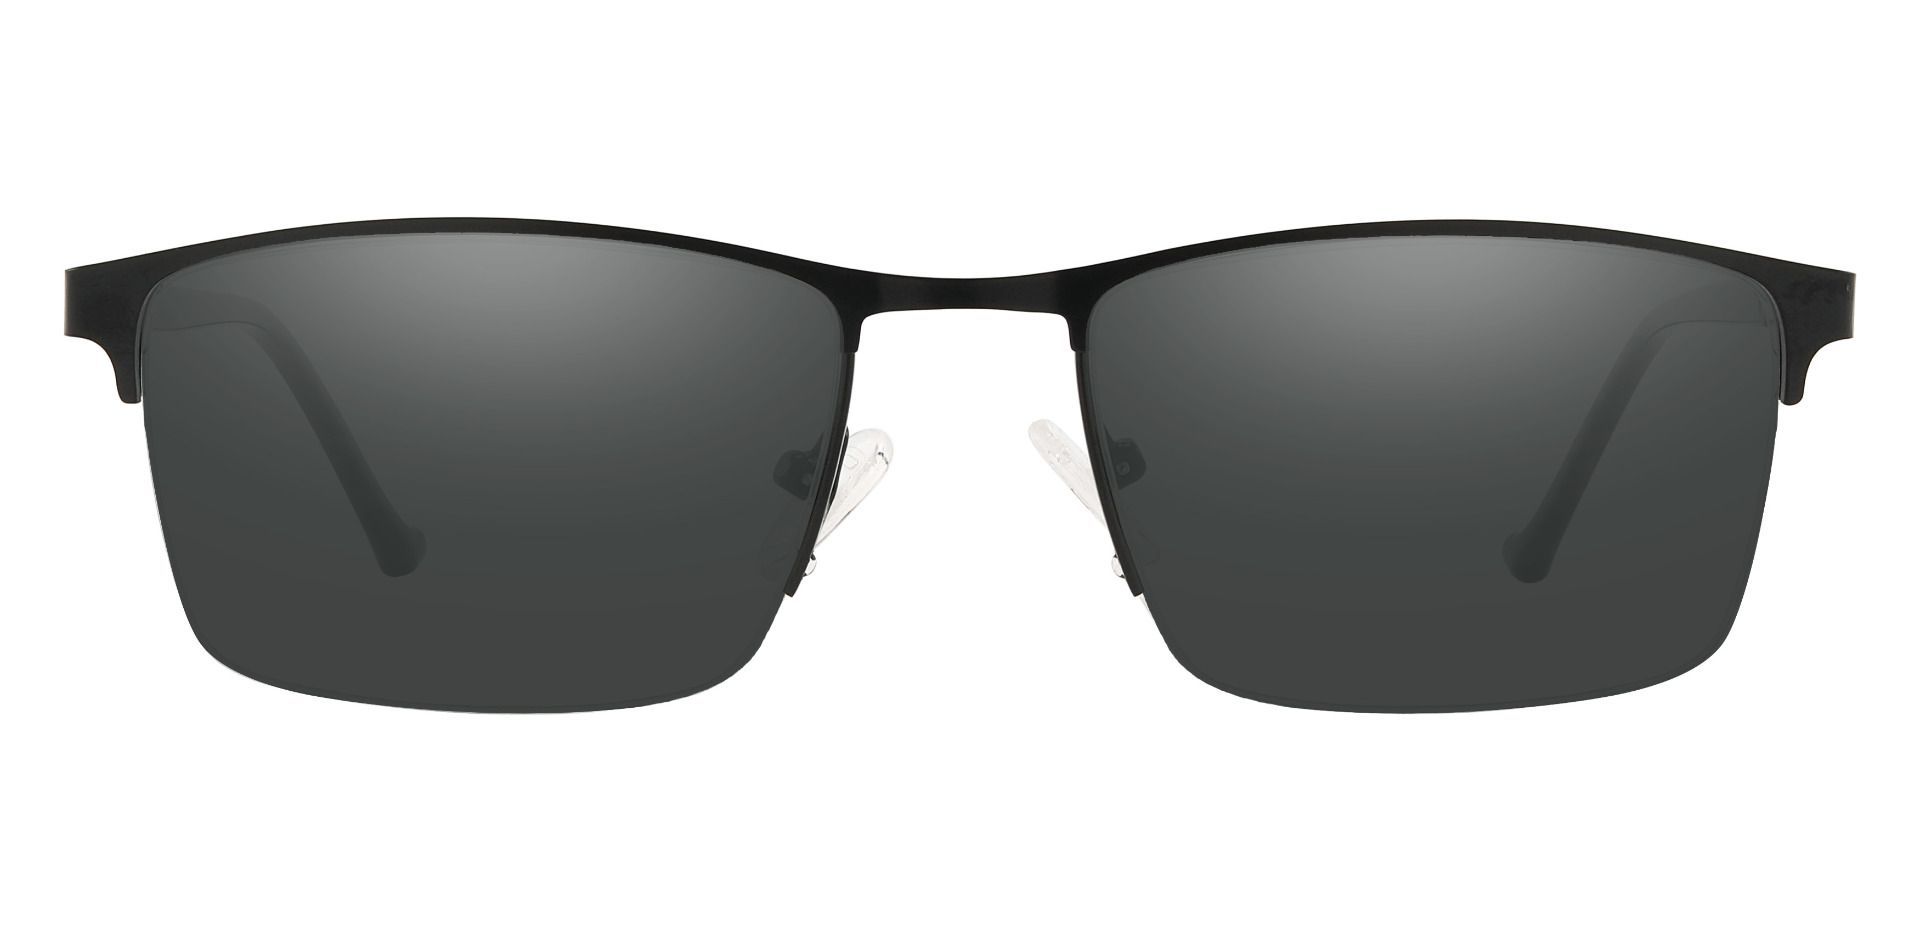 Arbor Rectangle Prescription Sunglasses - Black Frame With Gray Lenses